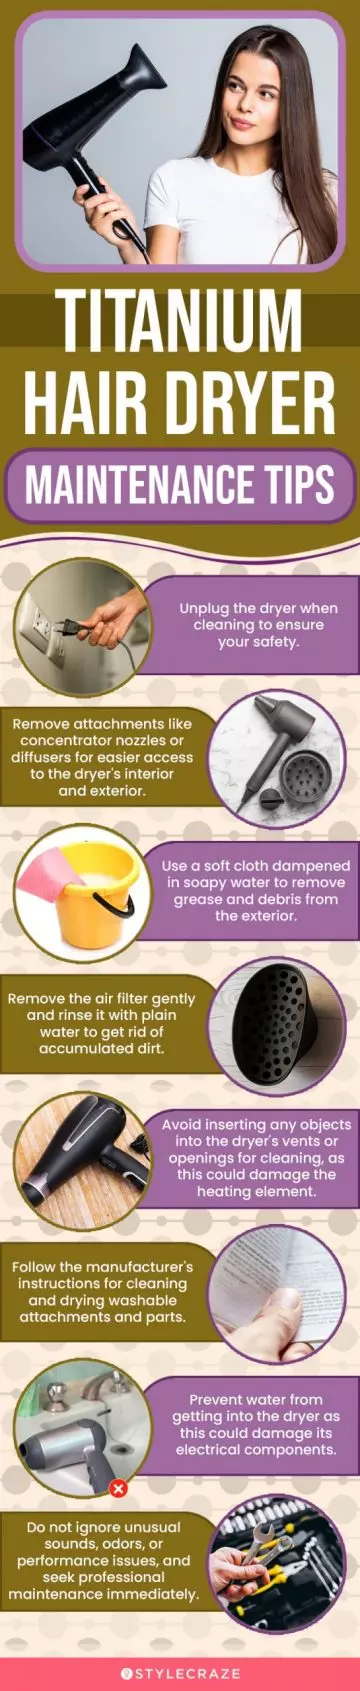 Titanium Hair Dryer Maintenance Tips (infographic)